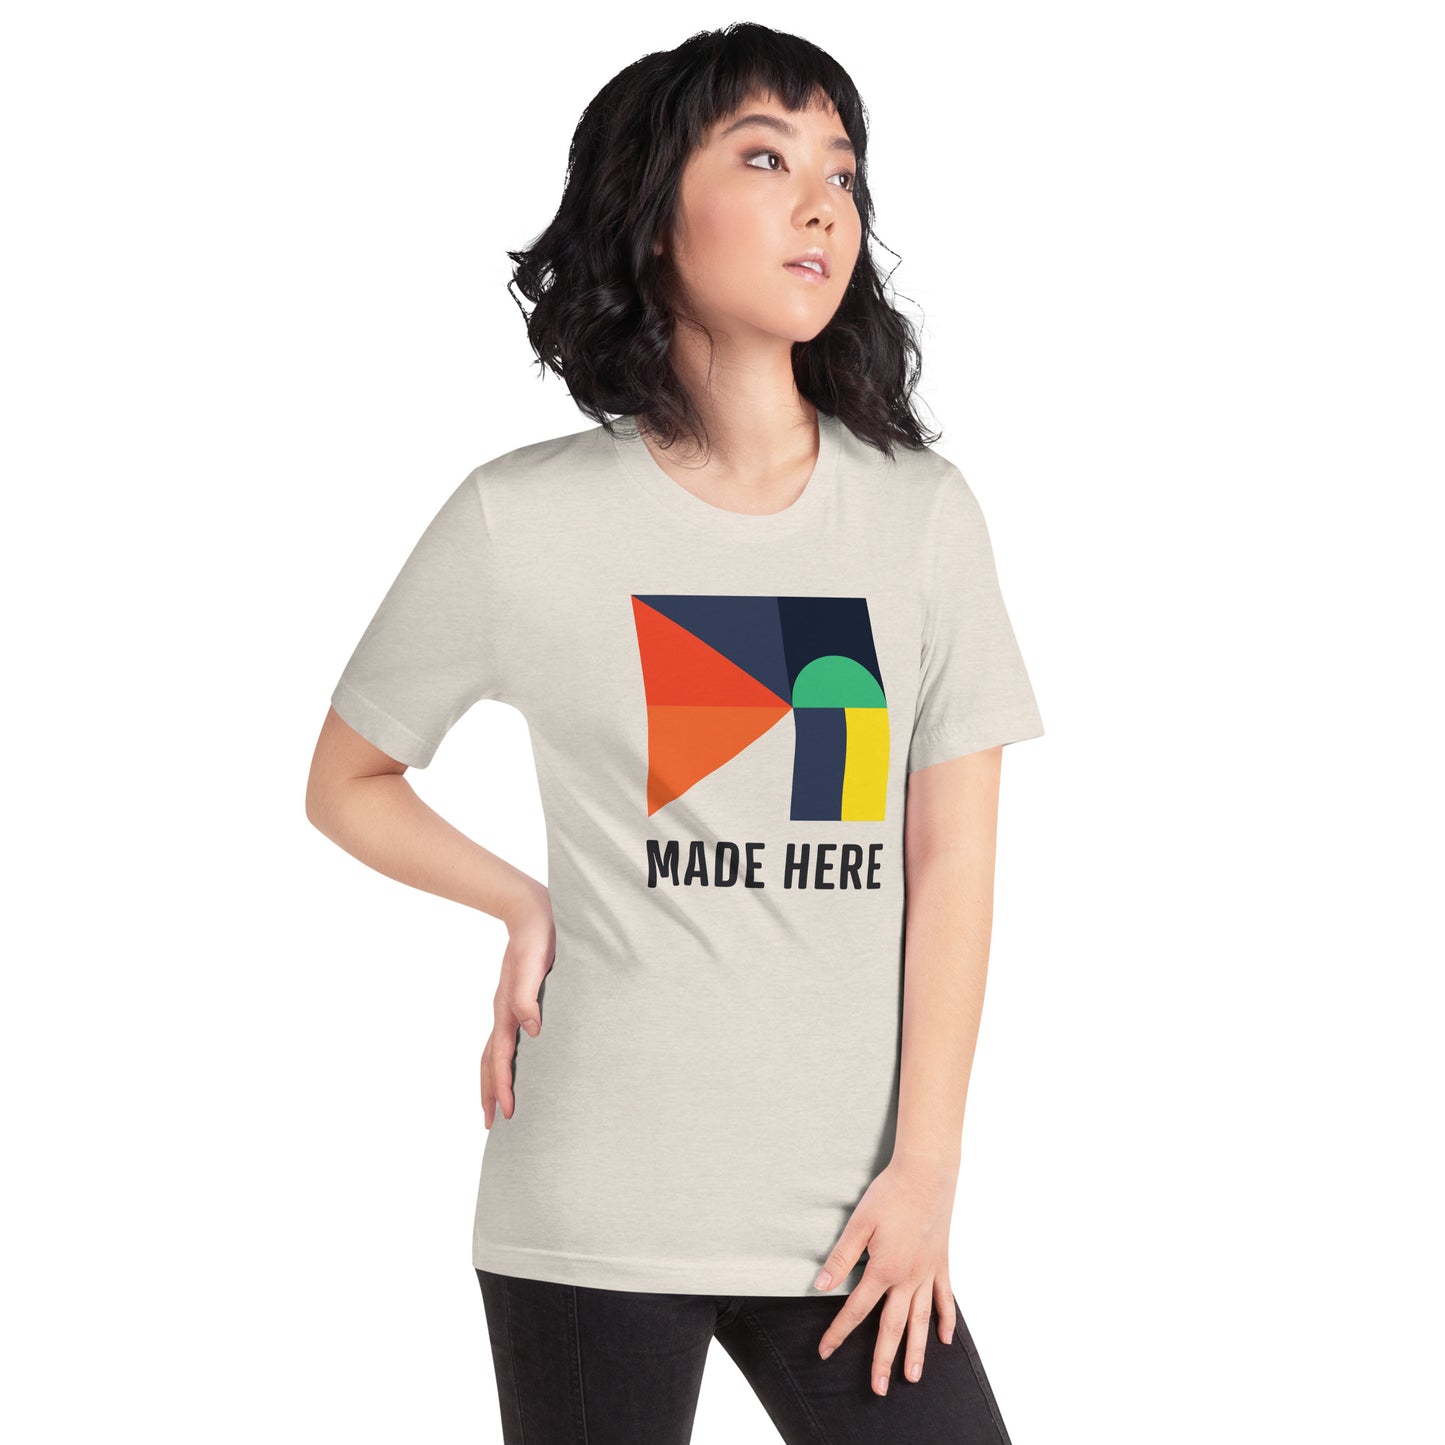 Made Here T-Shirt